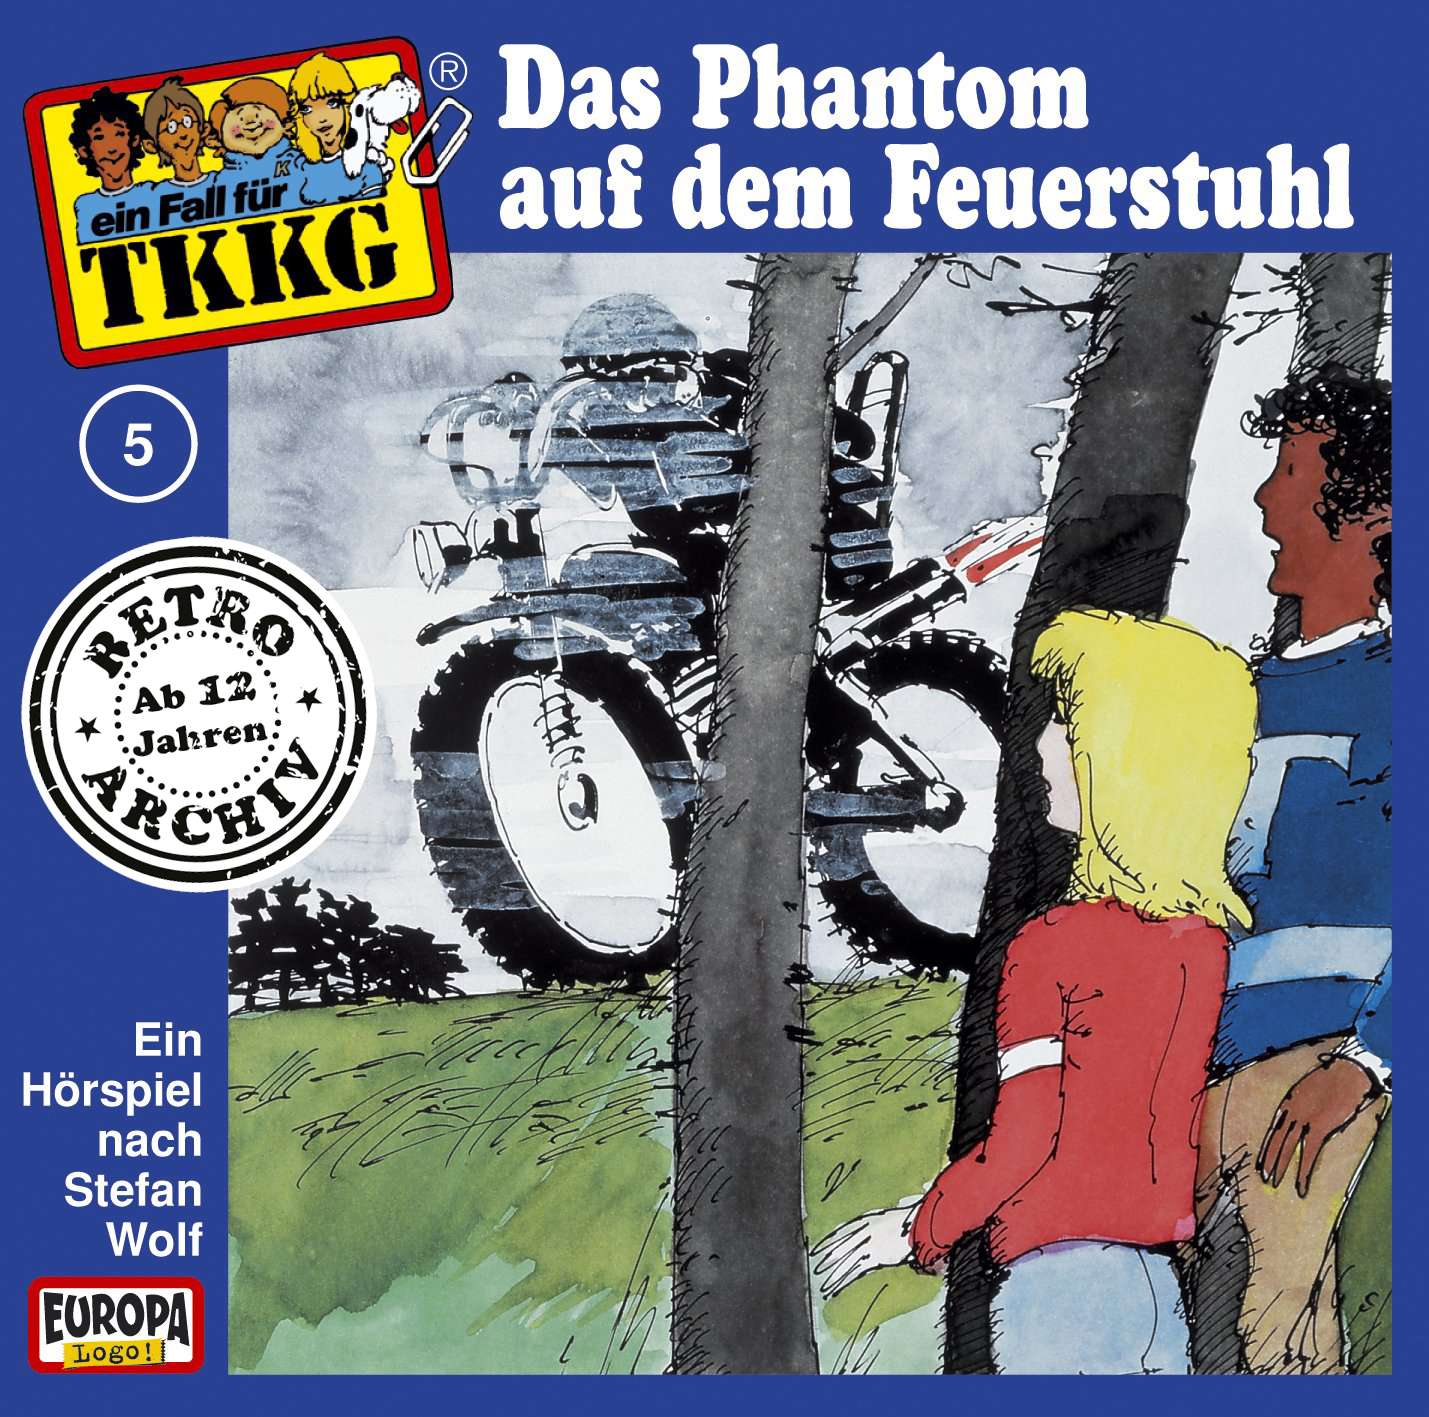 TKKG Retro-Archiv - Das Phantom auf dem Feuerstuhl